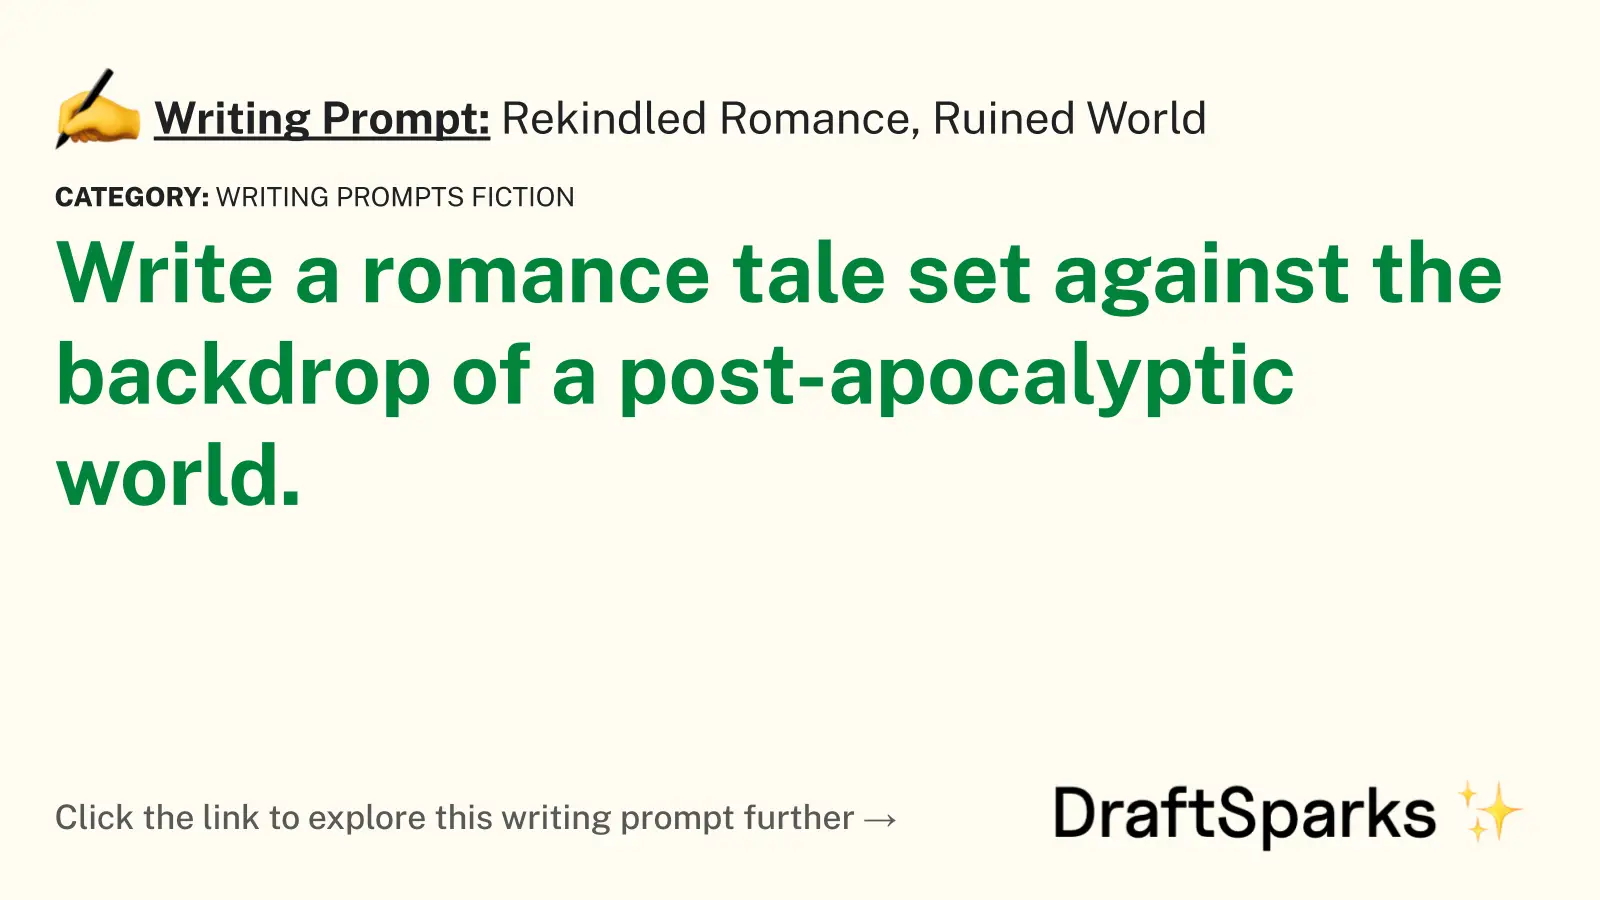 Rekindled Romance, Ruined World